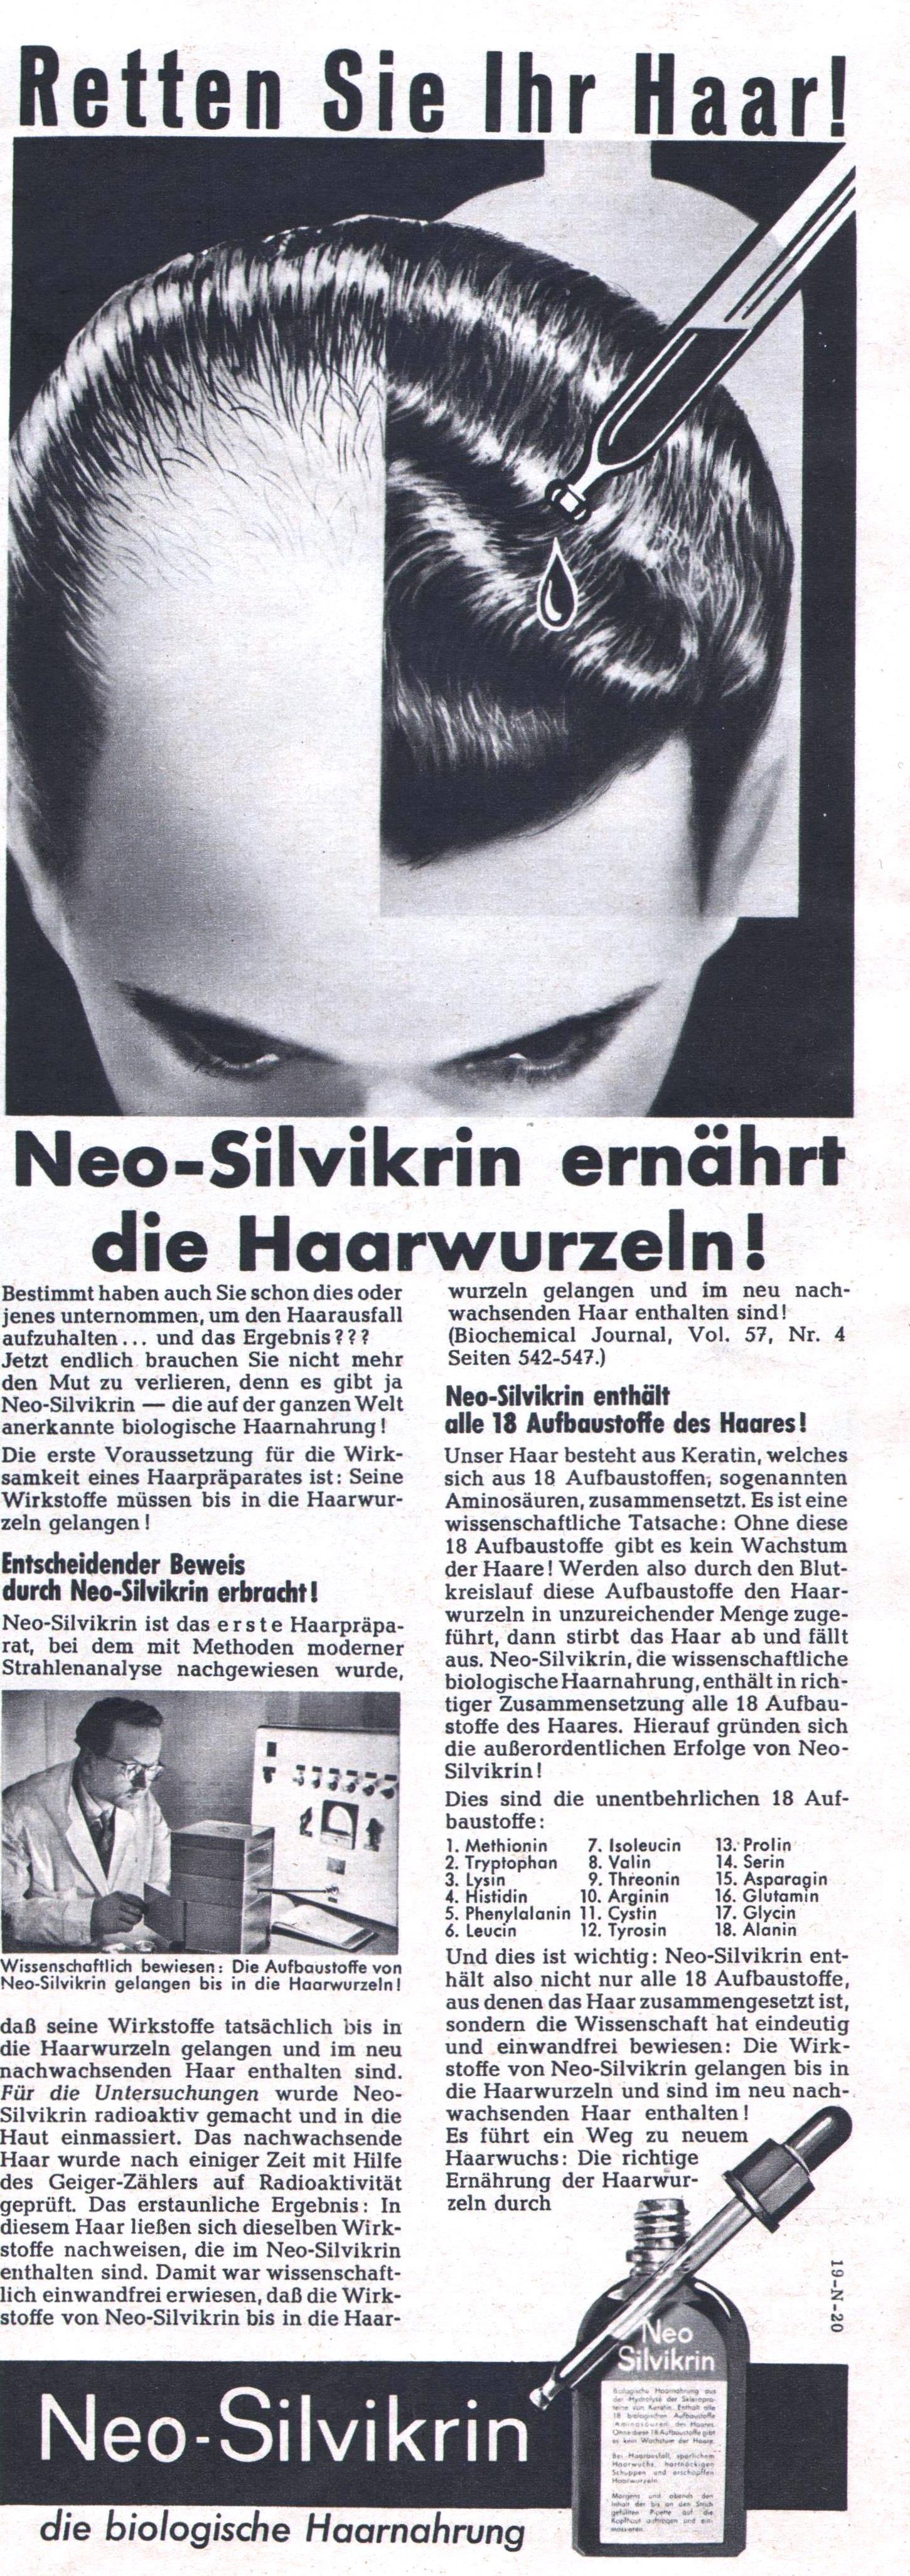 Neo-Silvikrin 1962 0.jpg